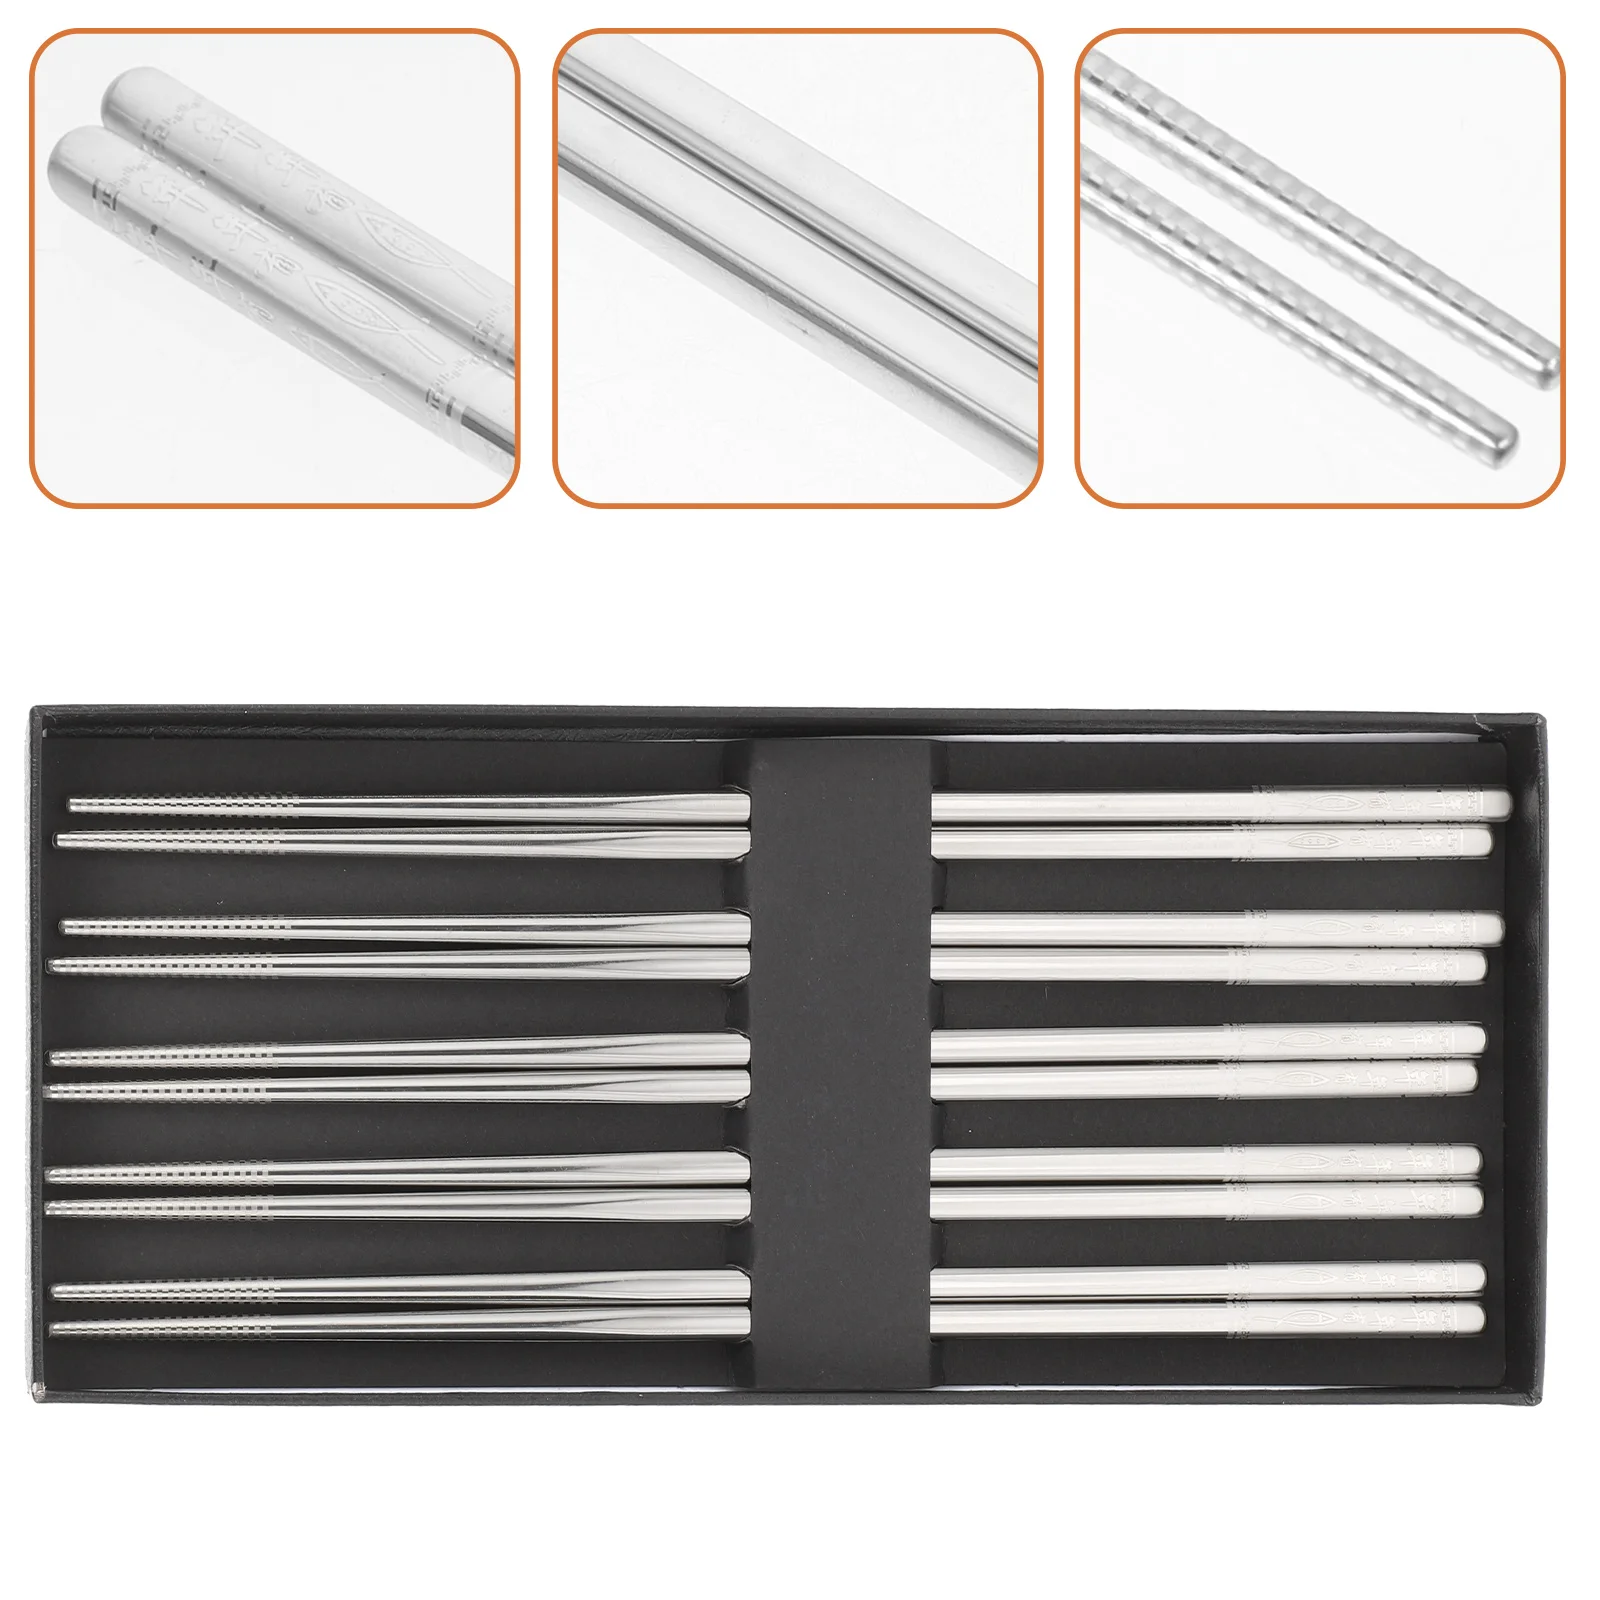 

Chopsticks Reusable Chop Sticks Metal Tableware Steel Dishwasher Safe Stainless Chopstick Exquisite Decorative Convenient